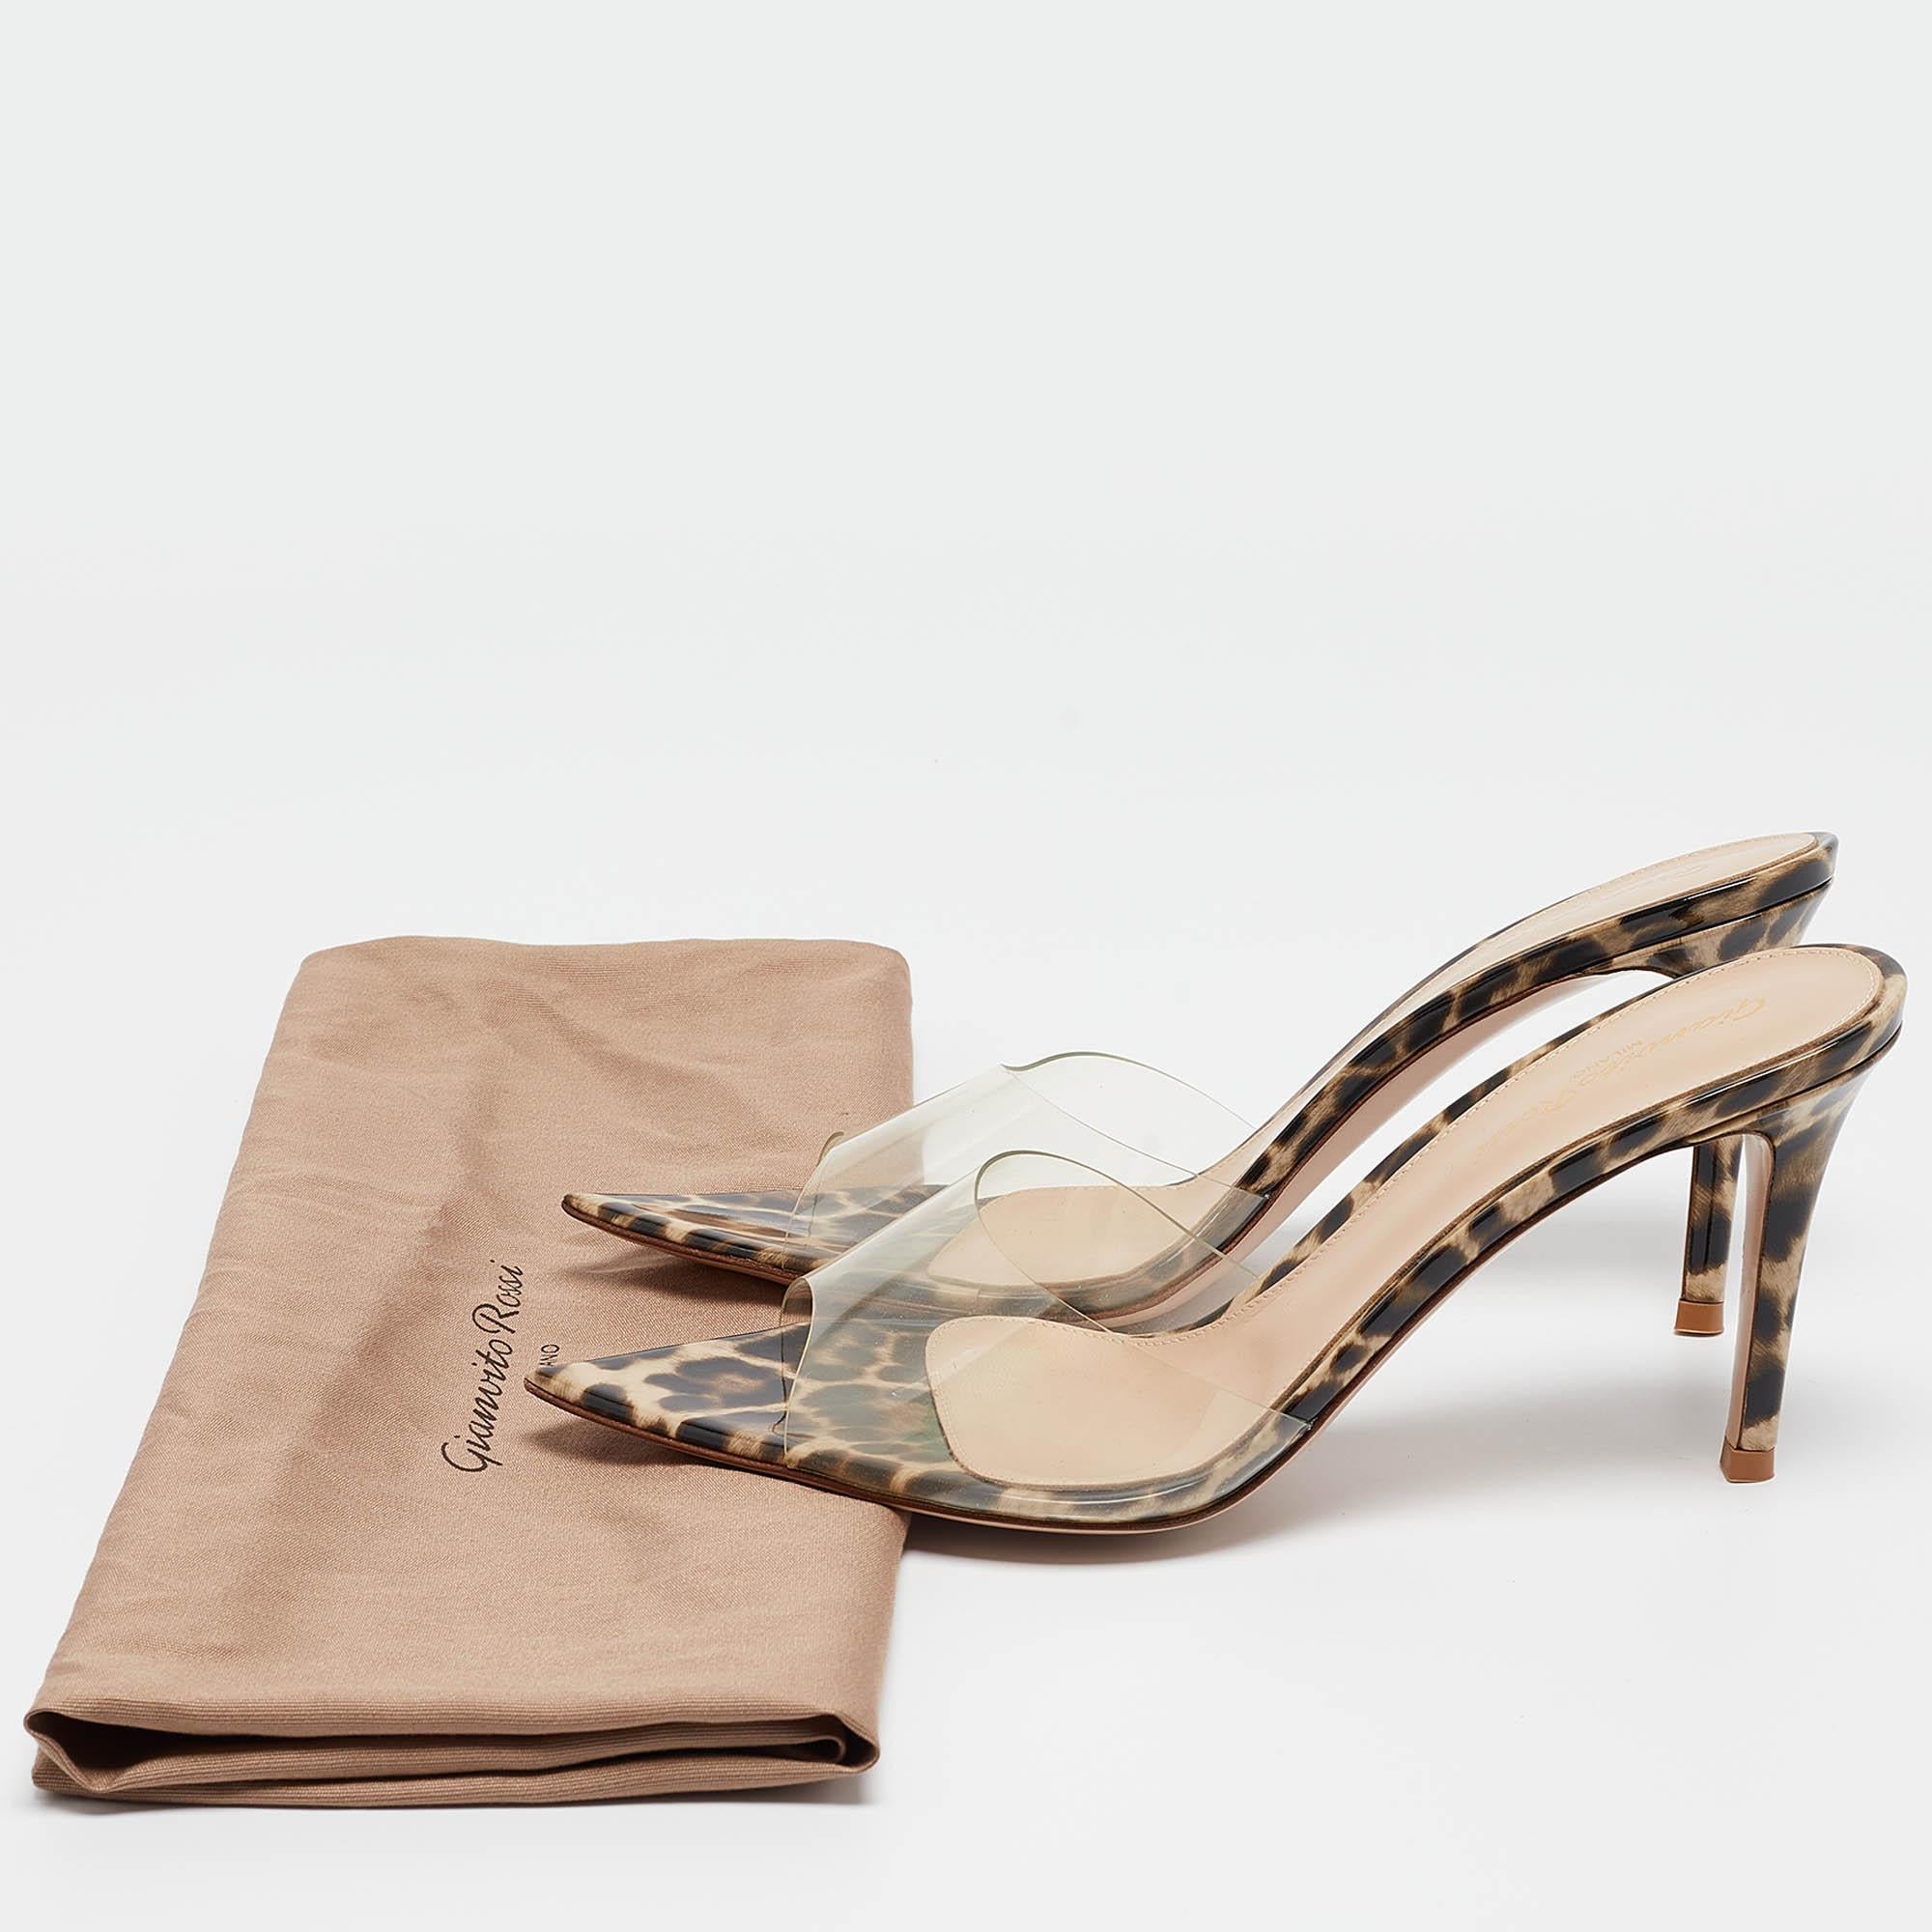 Gianvito Rossi Transparent PVC Elle Slide Sandals Size 38.5 5